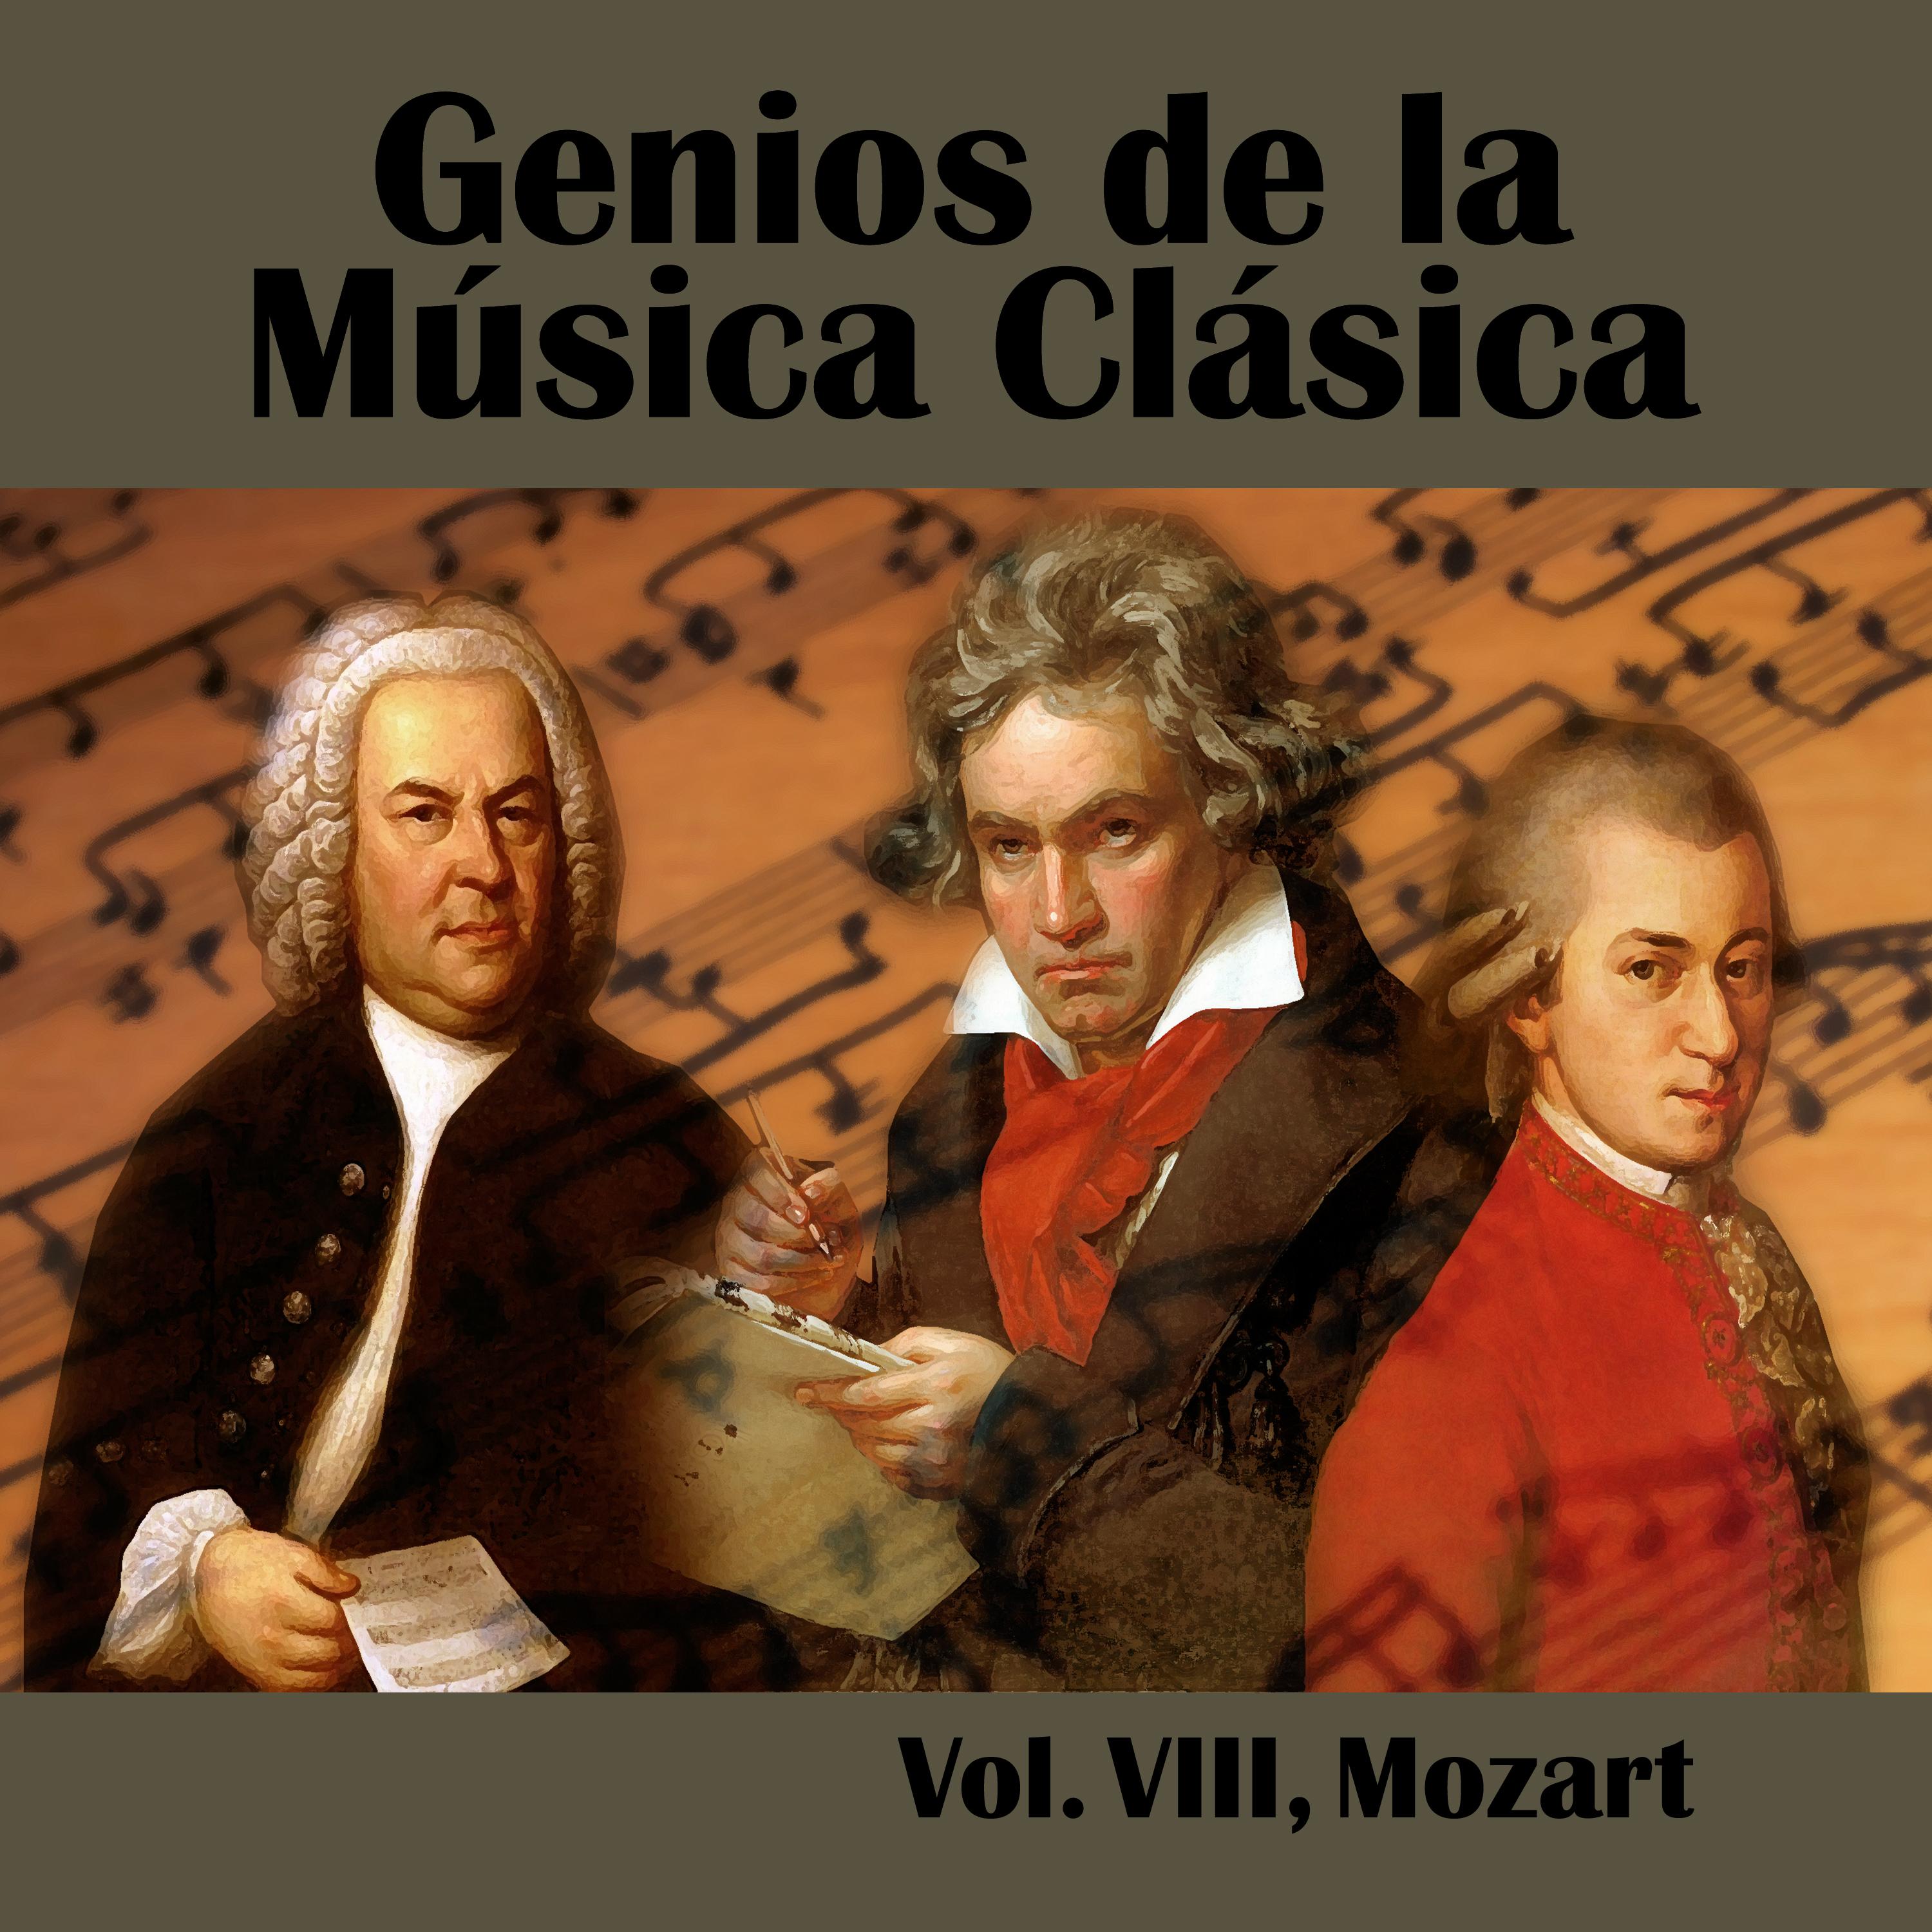 Genios de la Música Clásica Vol. VIII, Mozart